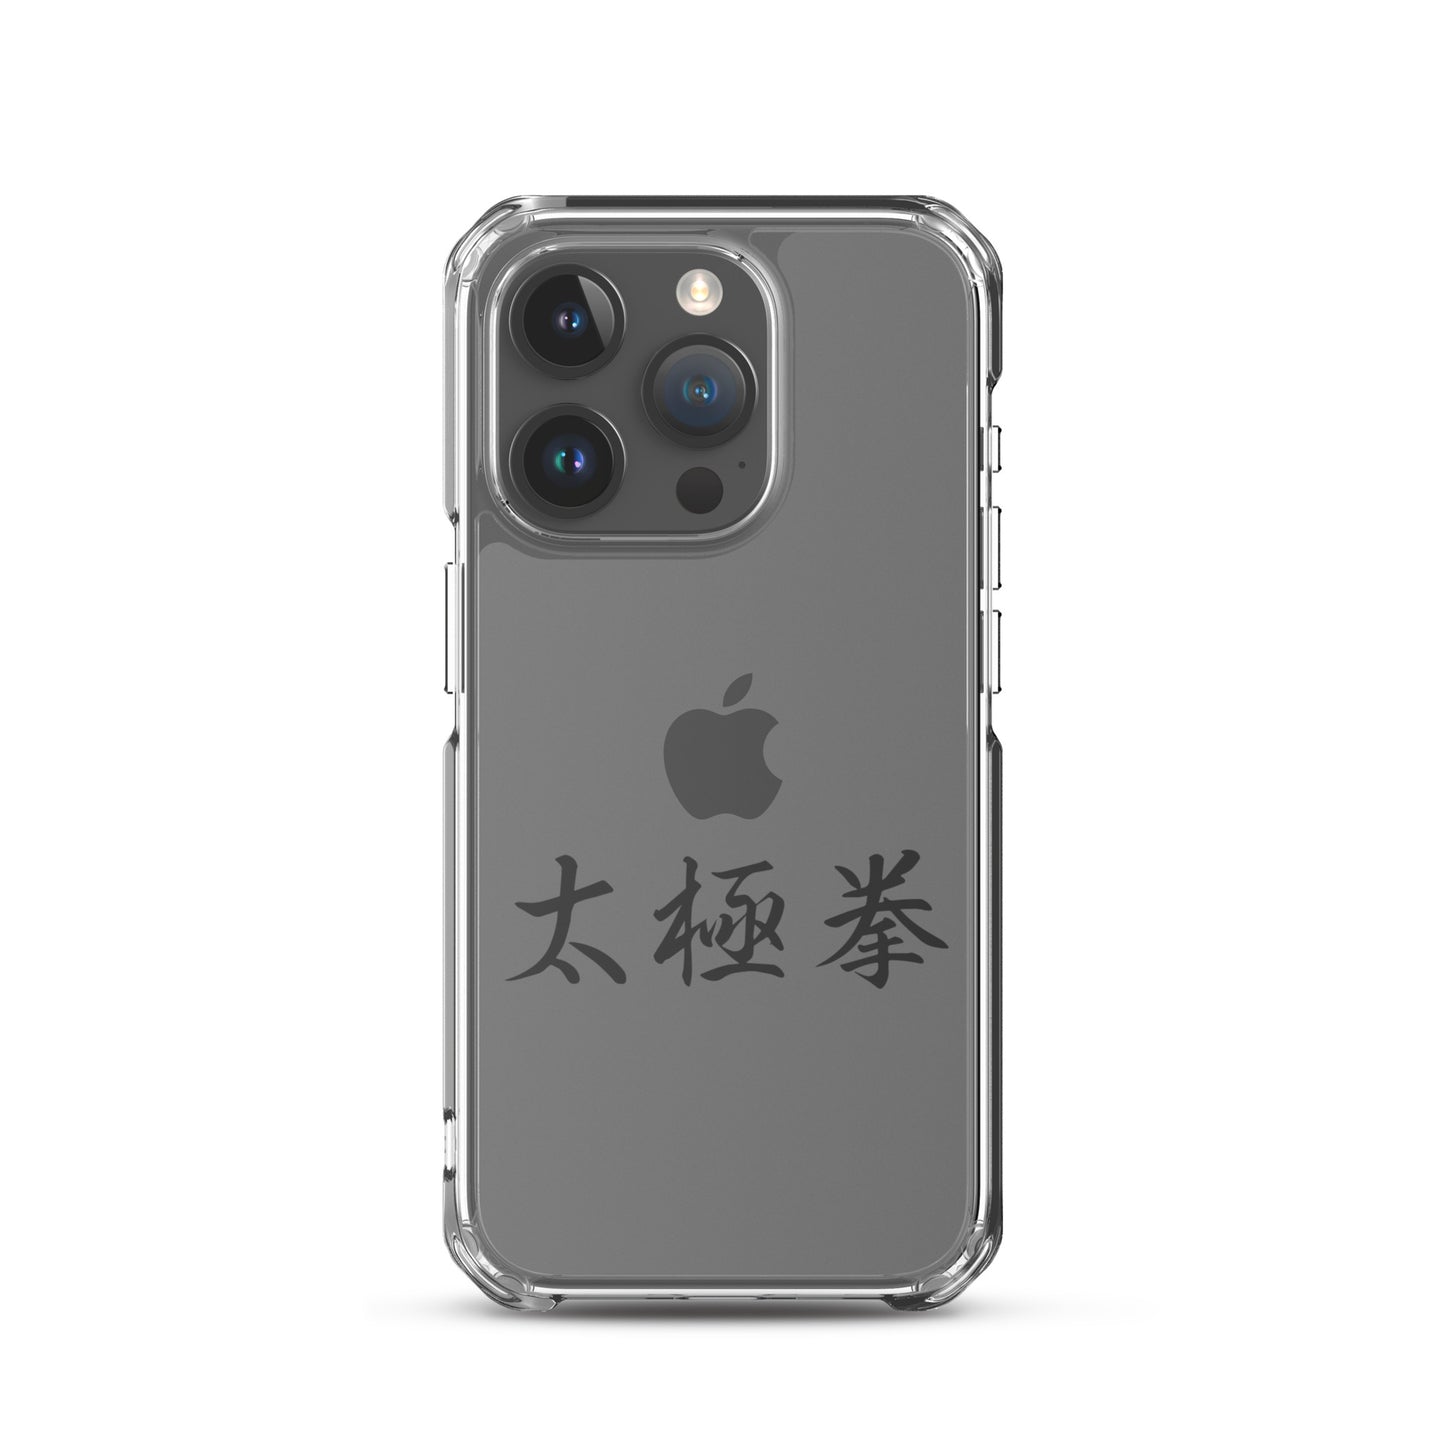 Tai Chi Chuan iPhone Case